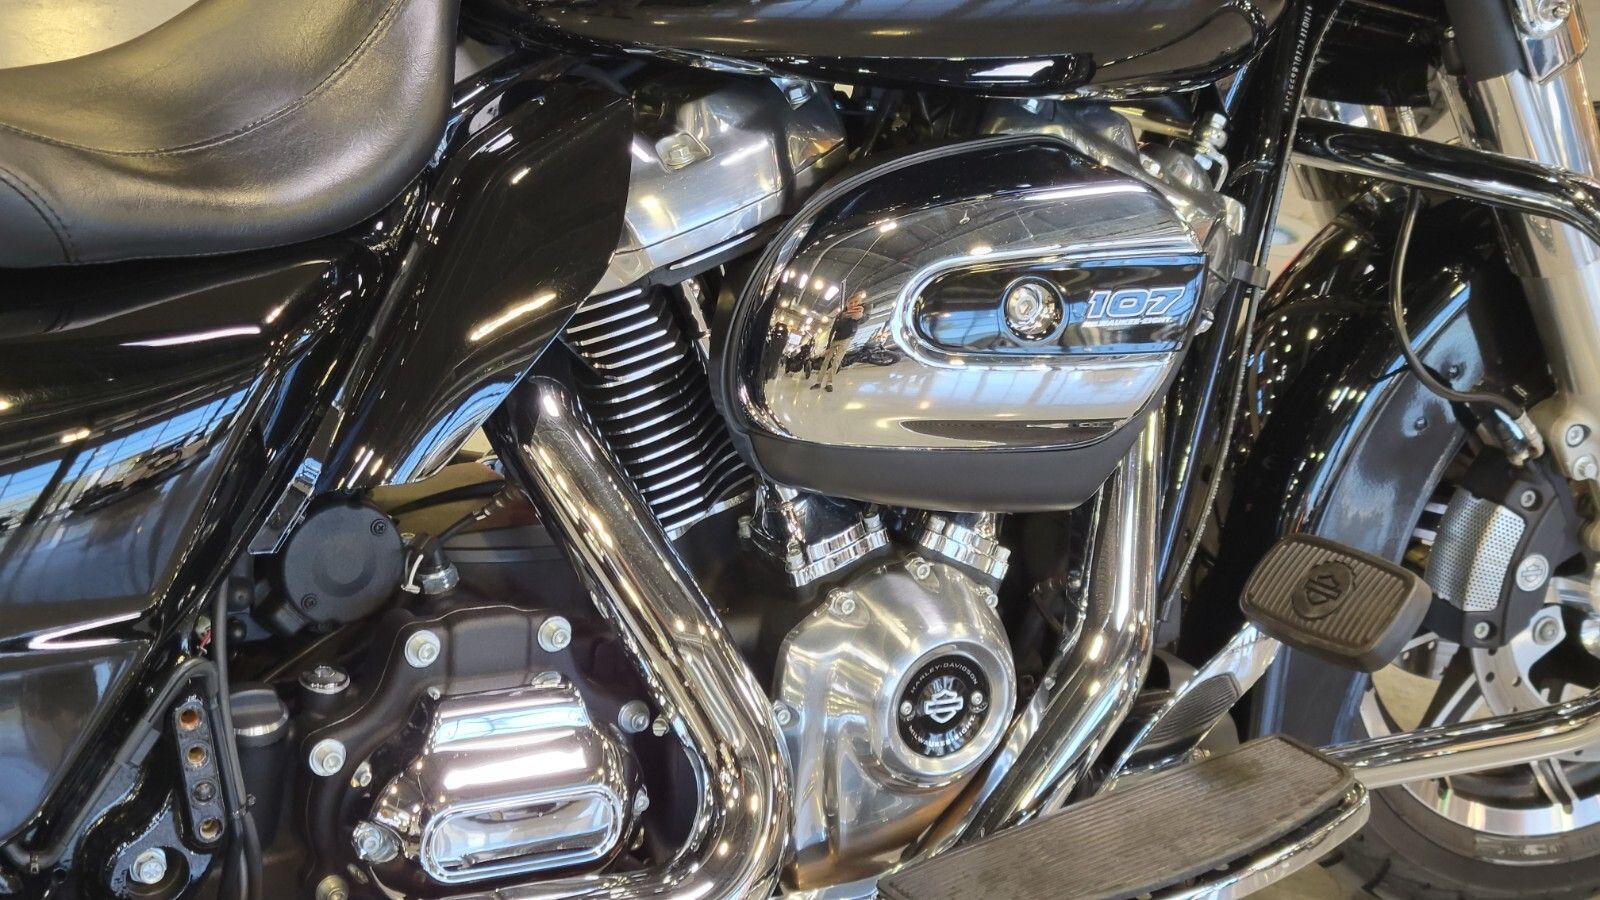 2020 Harley-Davidson Electra Glide® Standard in Las Vegas, Nevada - Photo 4